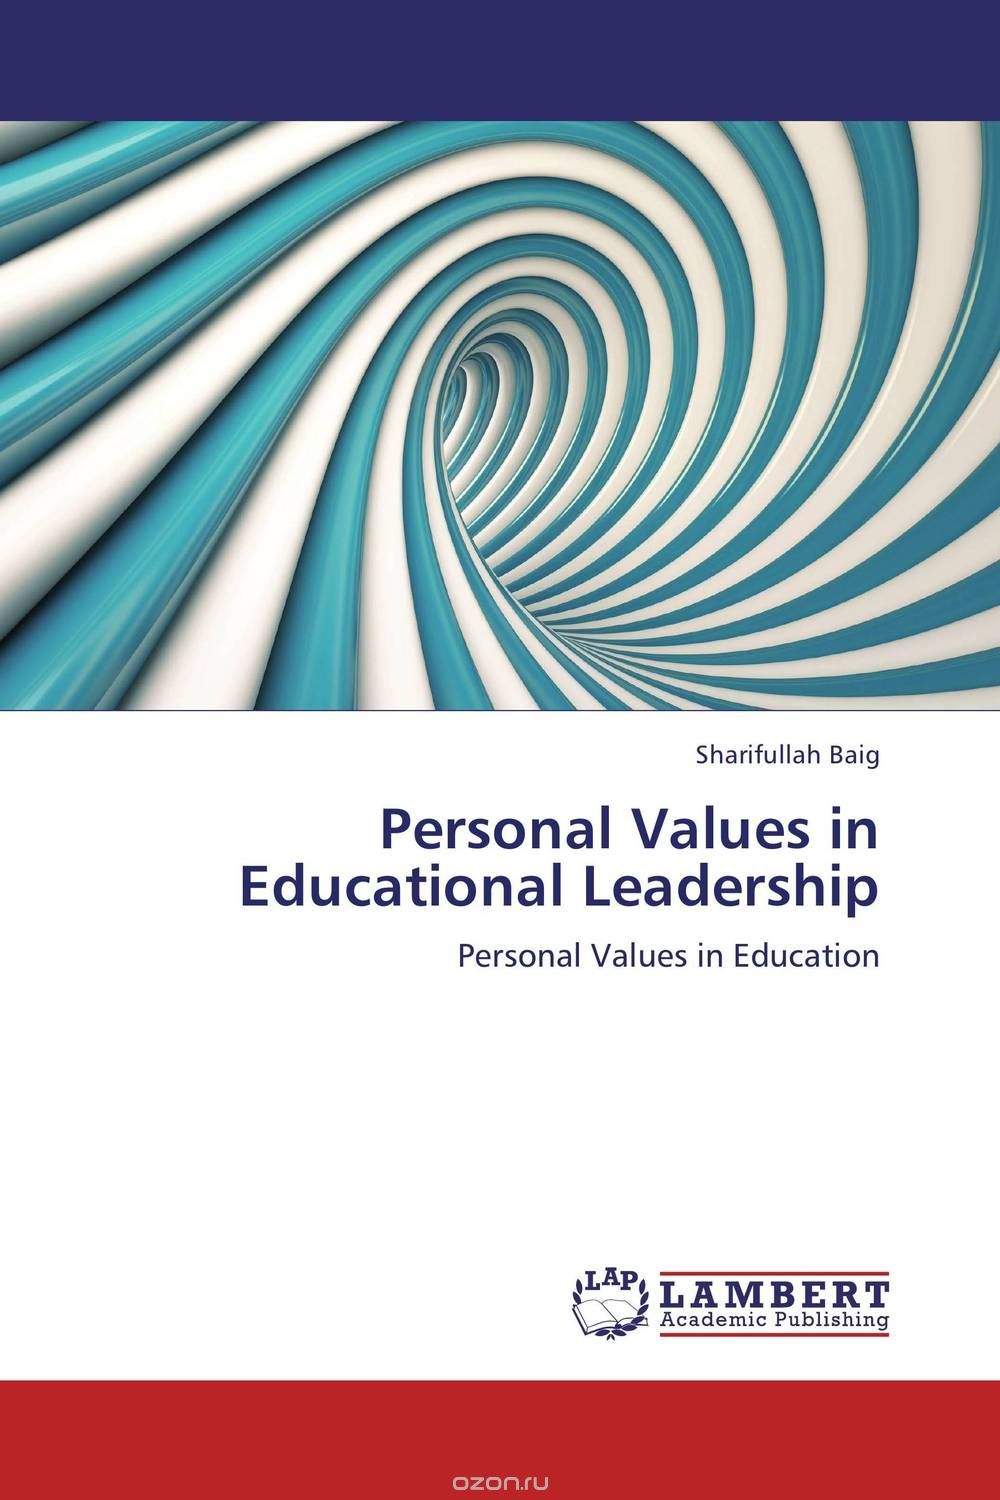 Скачать книгу "Personal Values in Educational Leadership"